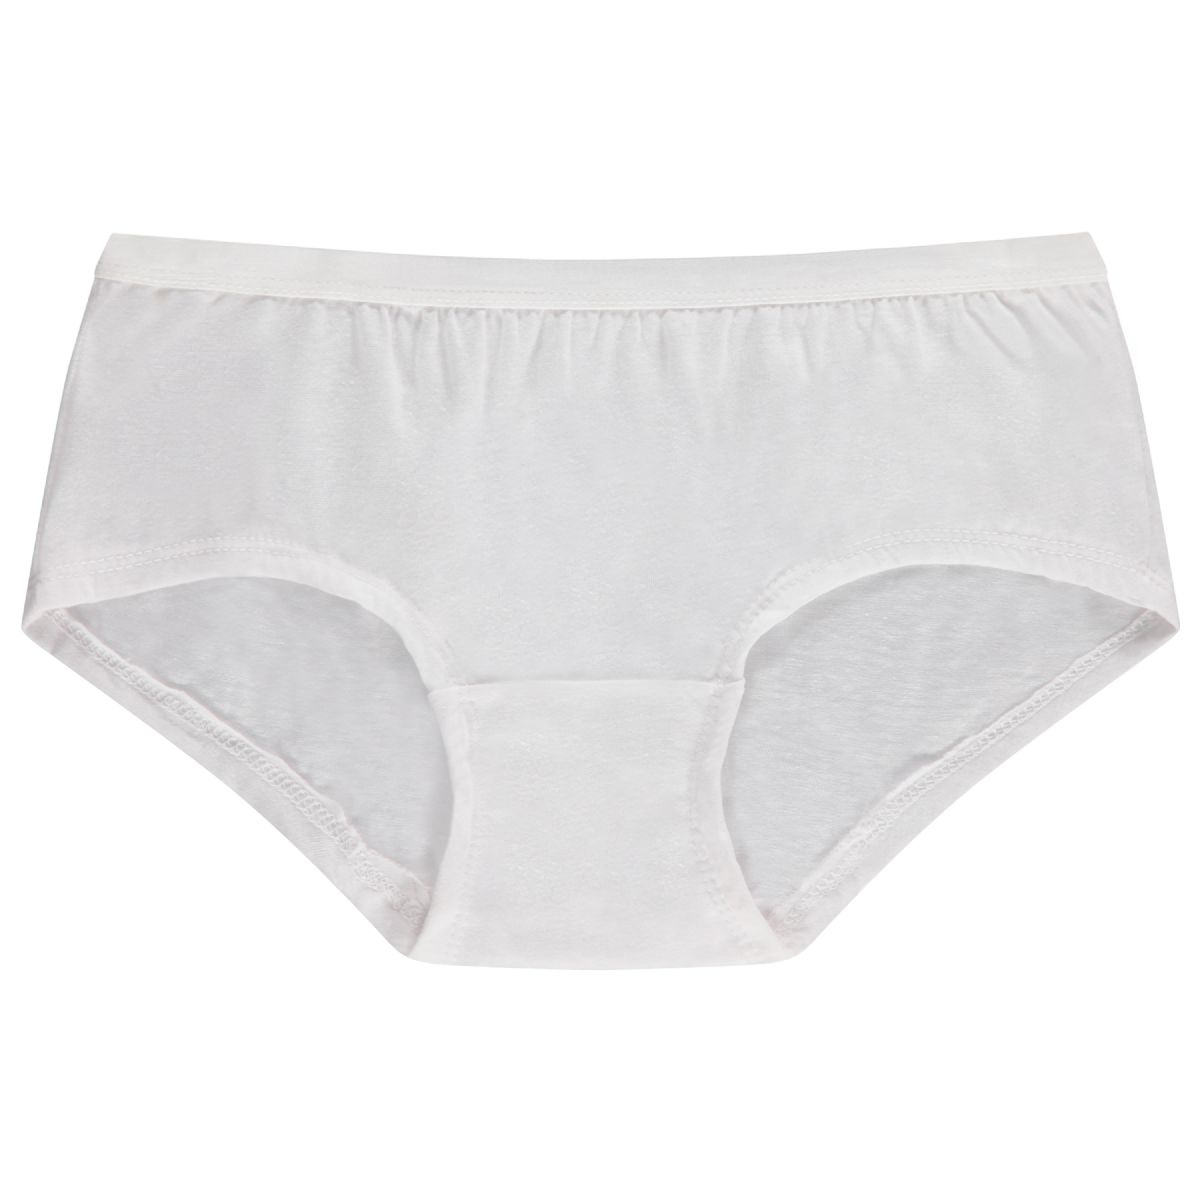 24 Wholesale Yacht & Smith Womens Cotton Lycra Underwear, Panty Briefs, 95%  Cotton Soft Assorted Colors, Size X-Large